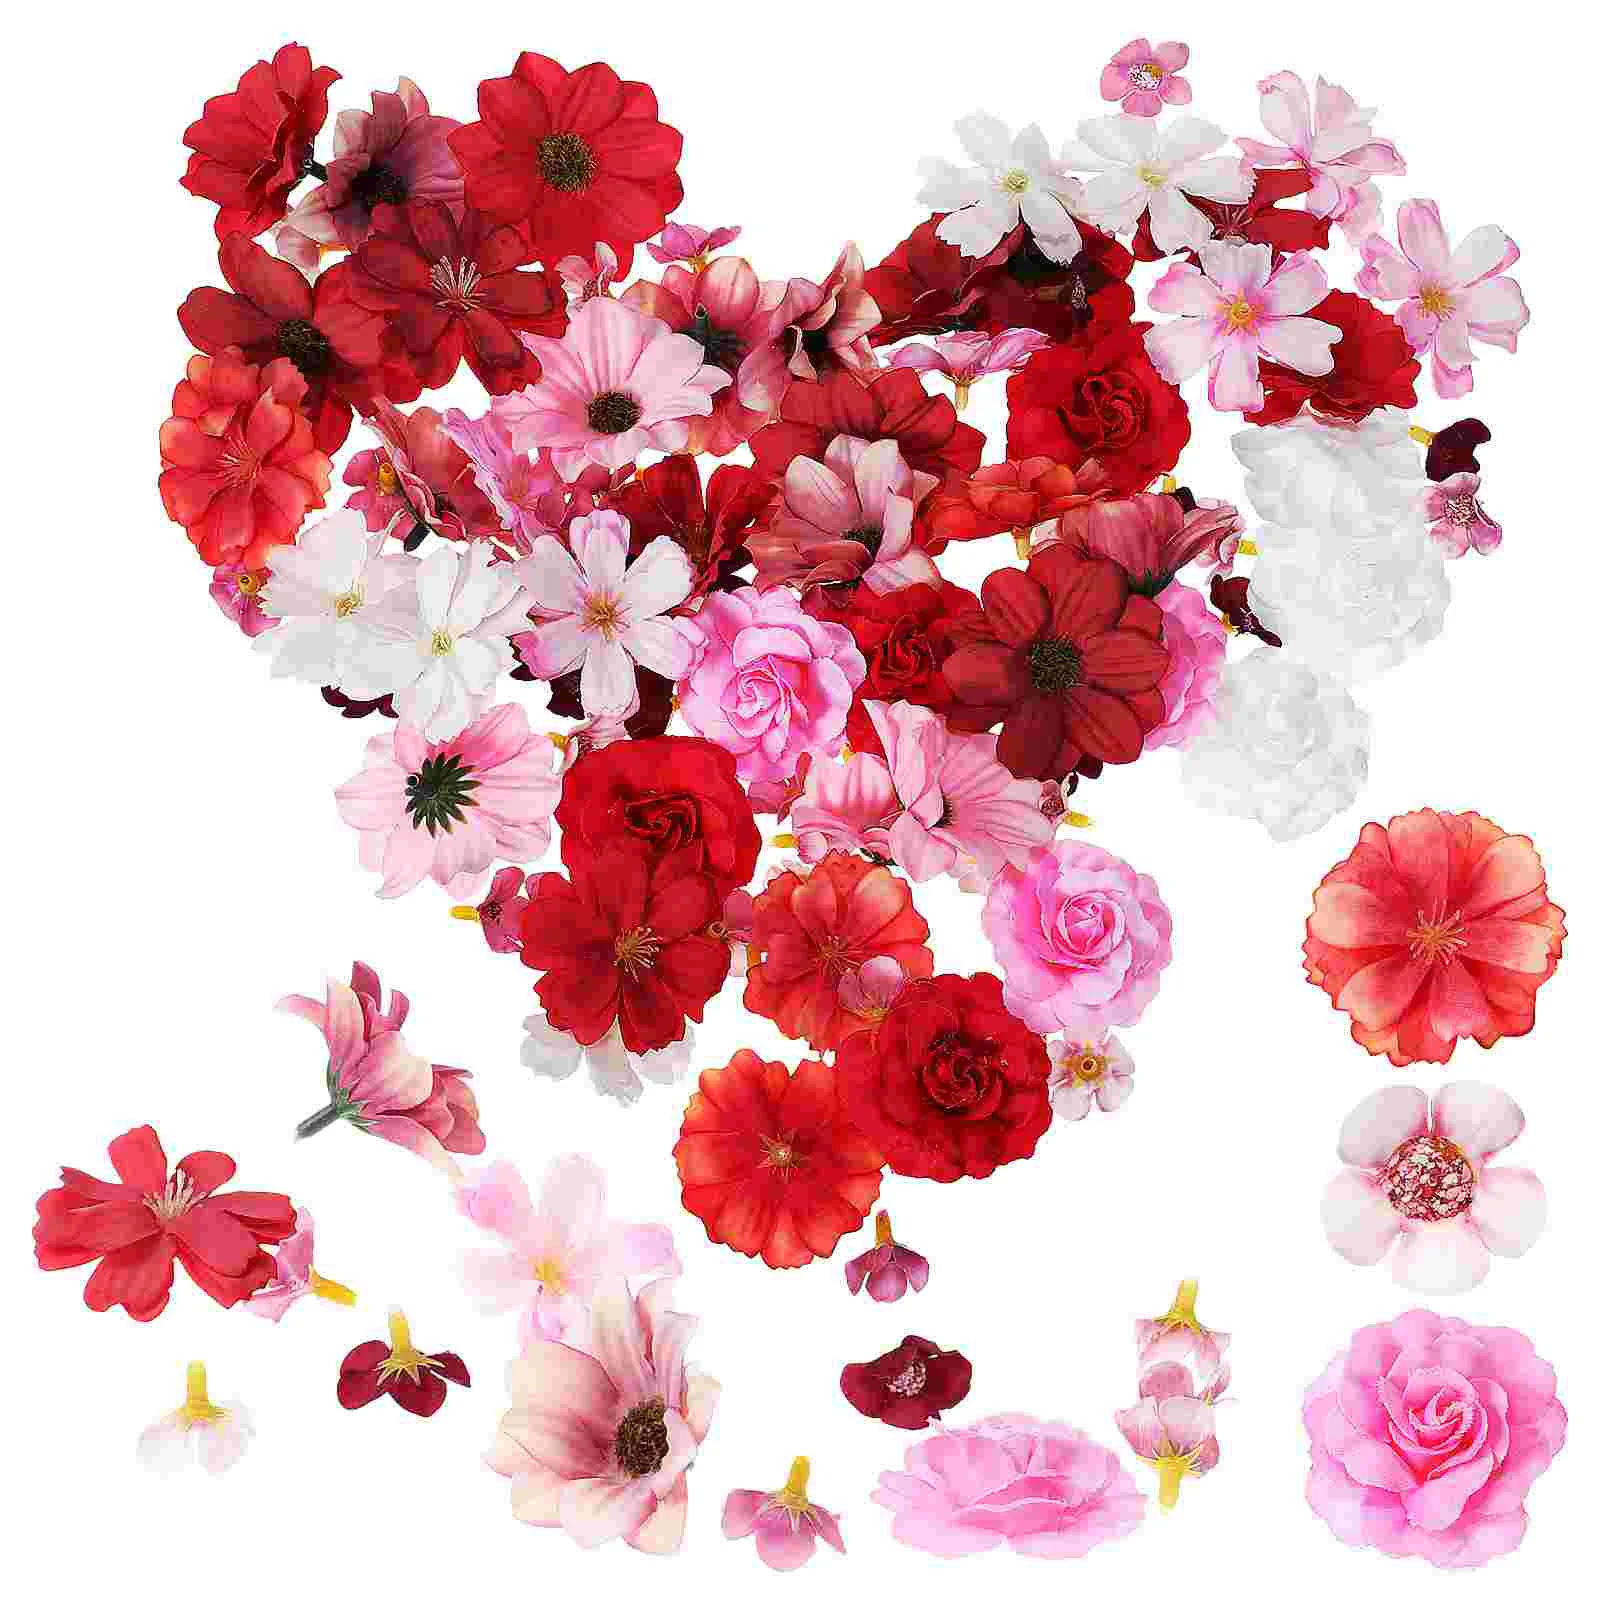 

100pcs Faux Flowers Heads Artificial Rose Plum Blossom Scrapbook Wedding Decoration